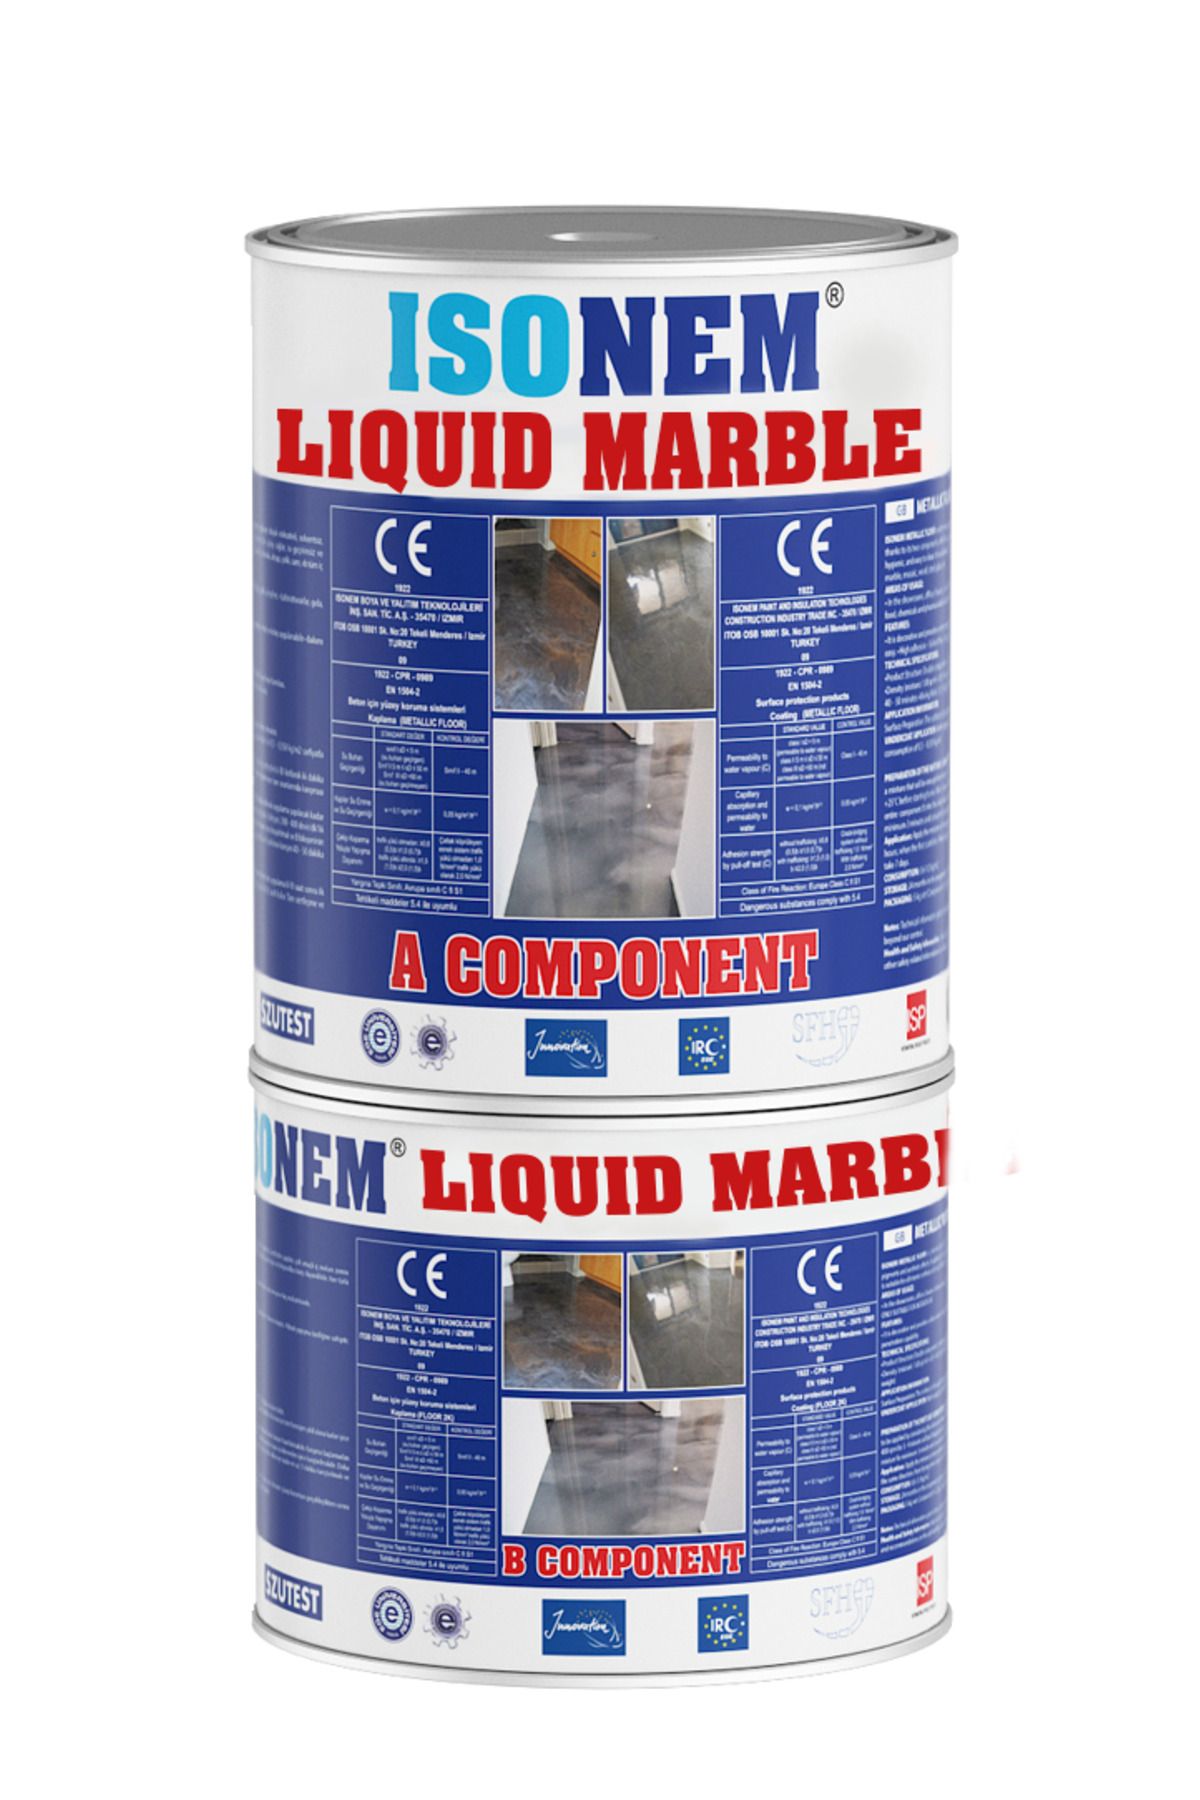 Isonem Liquid Marble ( Sıvı Mermer ) Mermer için sıvı kaplama Malzemesi 0.5 kg set M10 Gold (ALTIN)